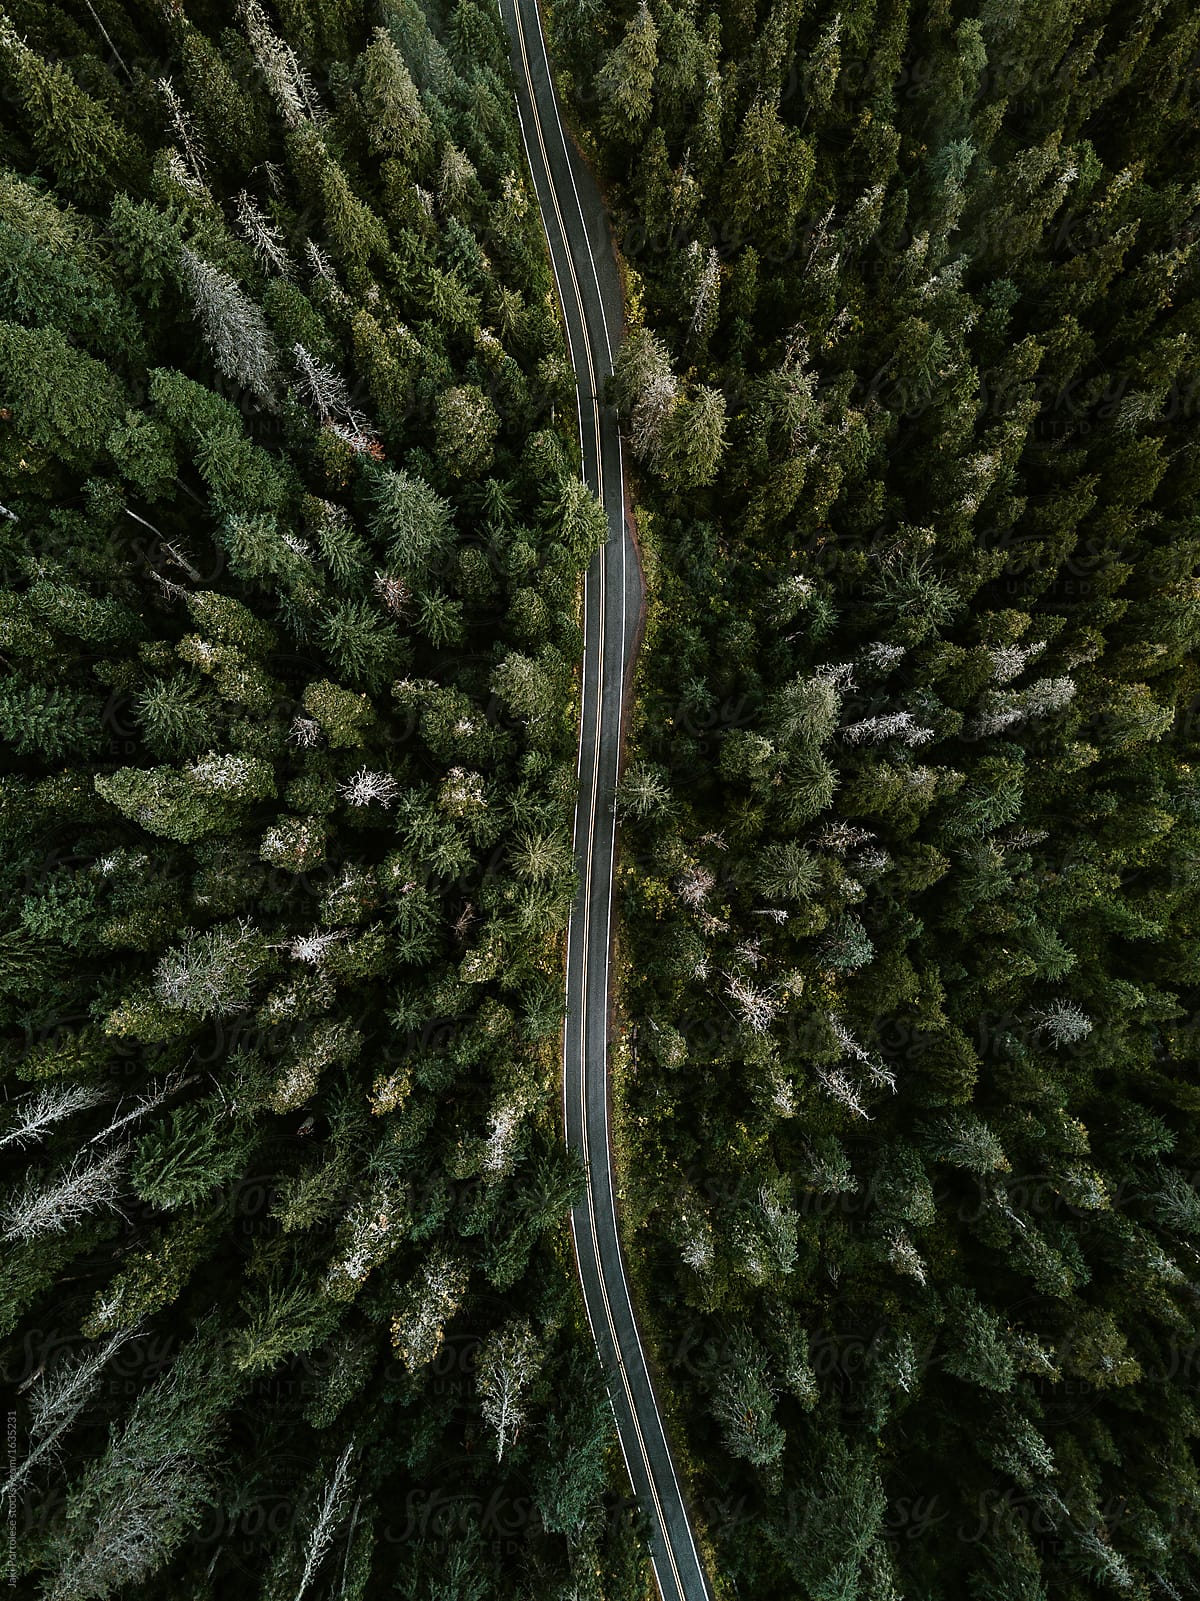 Road through evergreens